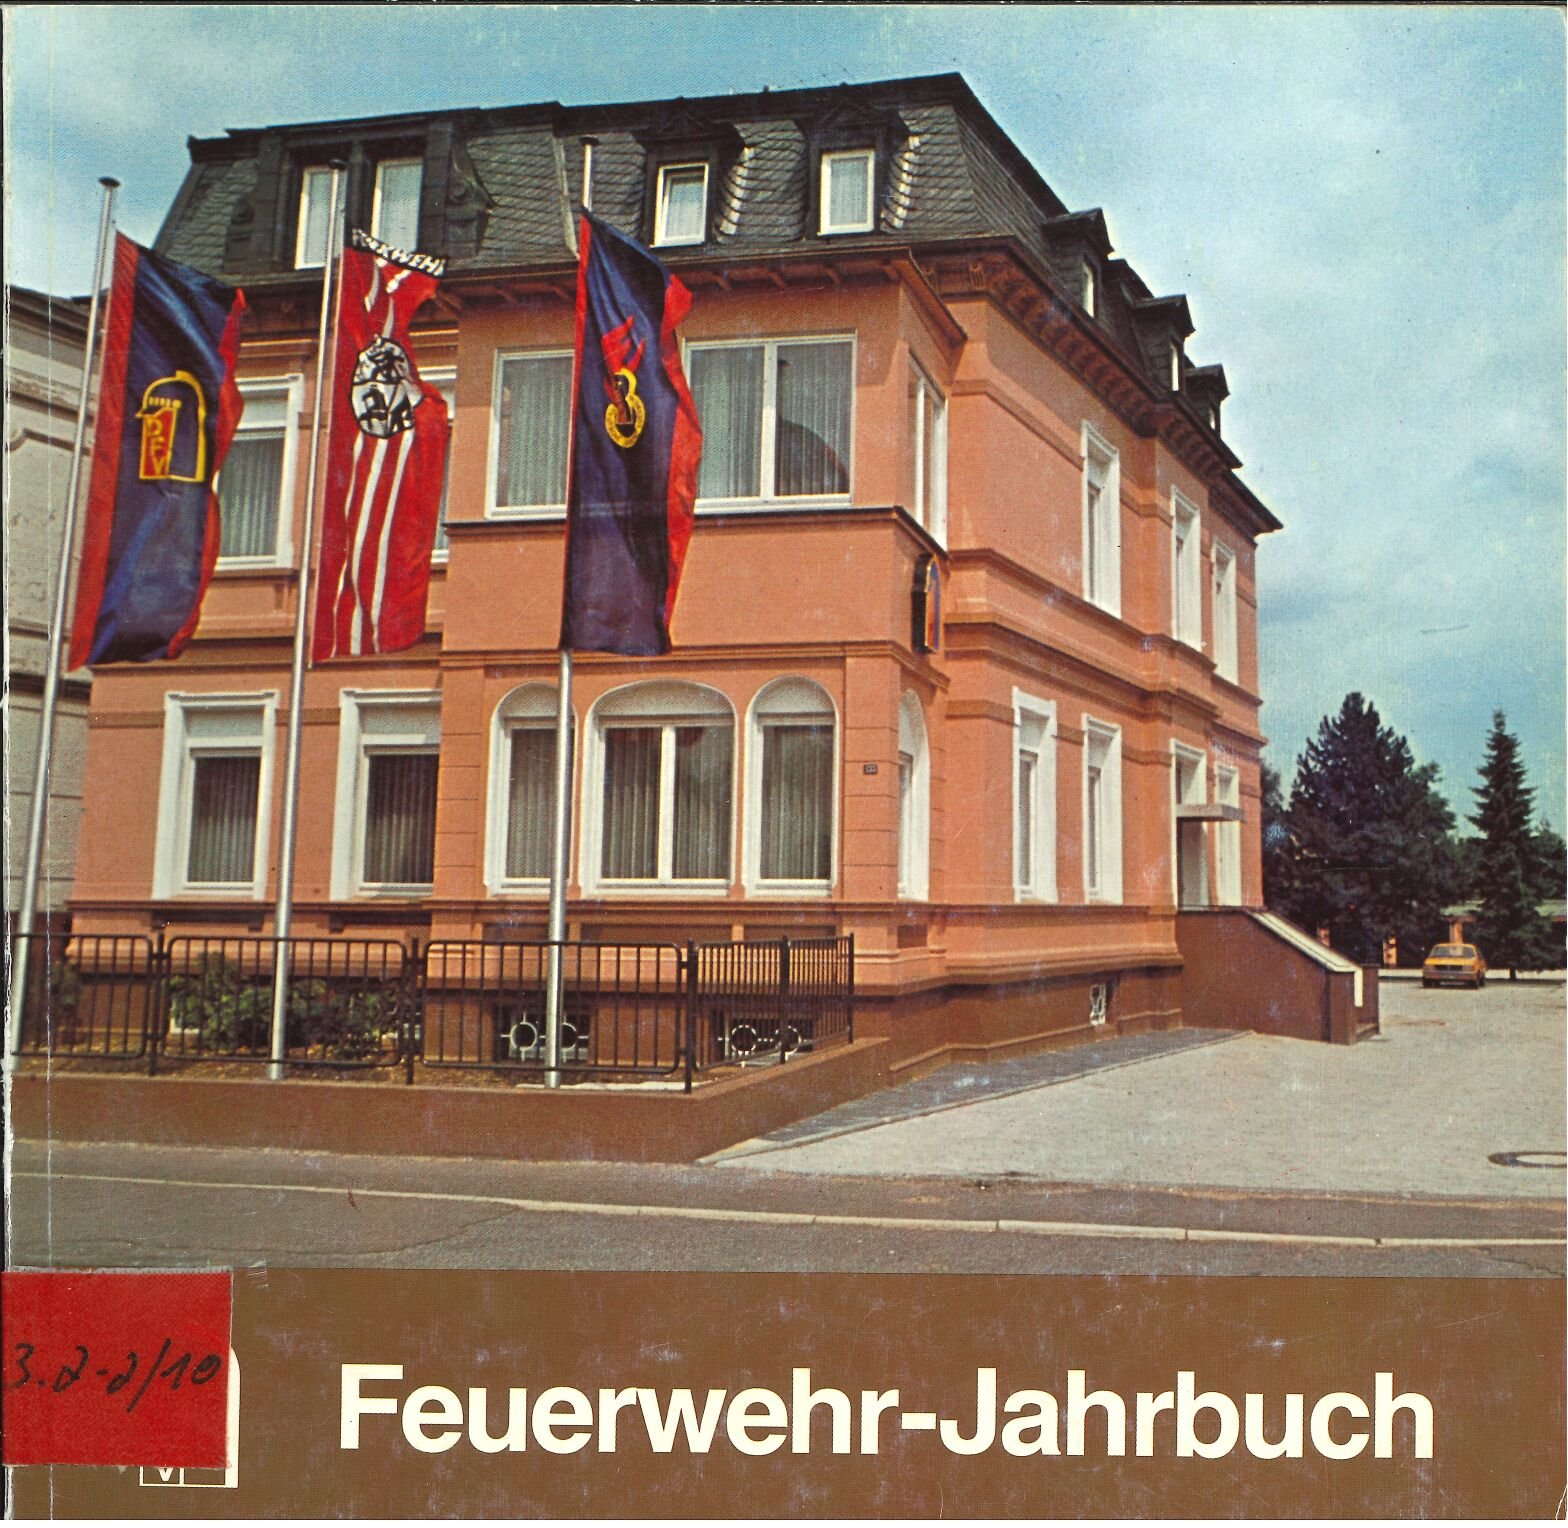 Feuerwehr-Jahrbuch 1979/80 (Feuerwehrmuseum Grethen CC BY-NC-SA)